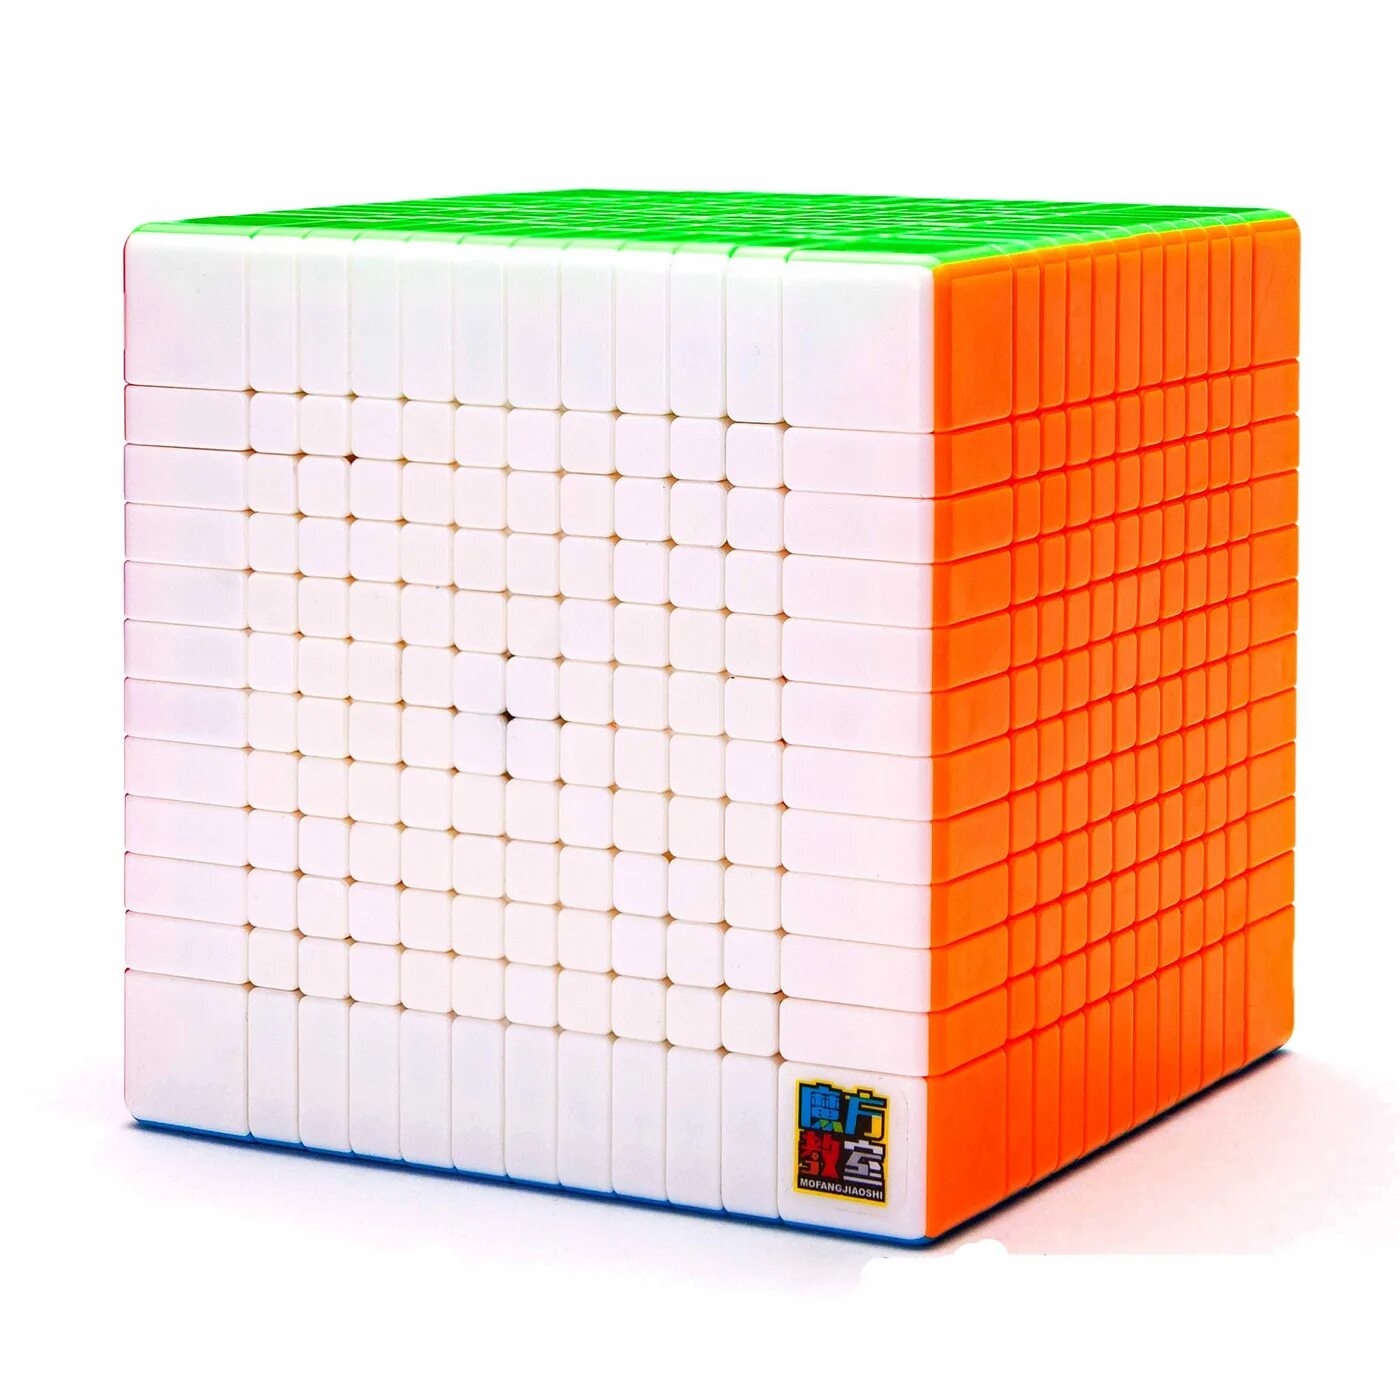 Big cube. Кубик Рубика 12х12. Кубик Рубика 12 на 12. 12x12 кубик Рубика. Shengshou 12x12x12.